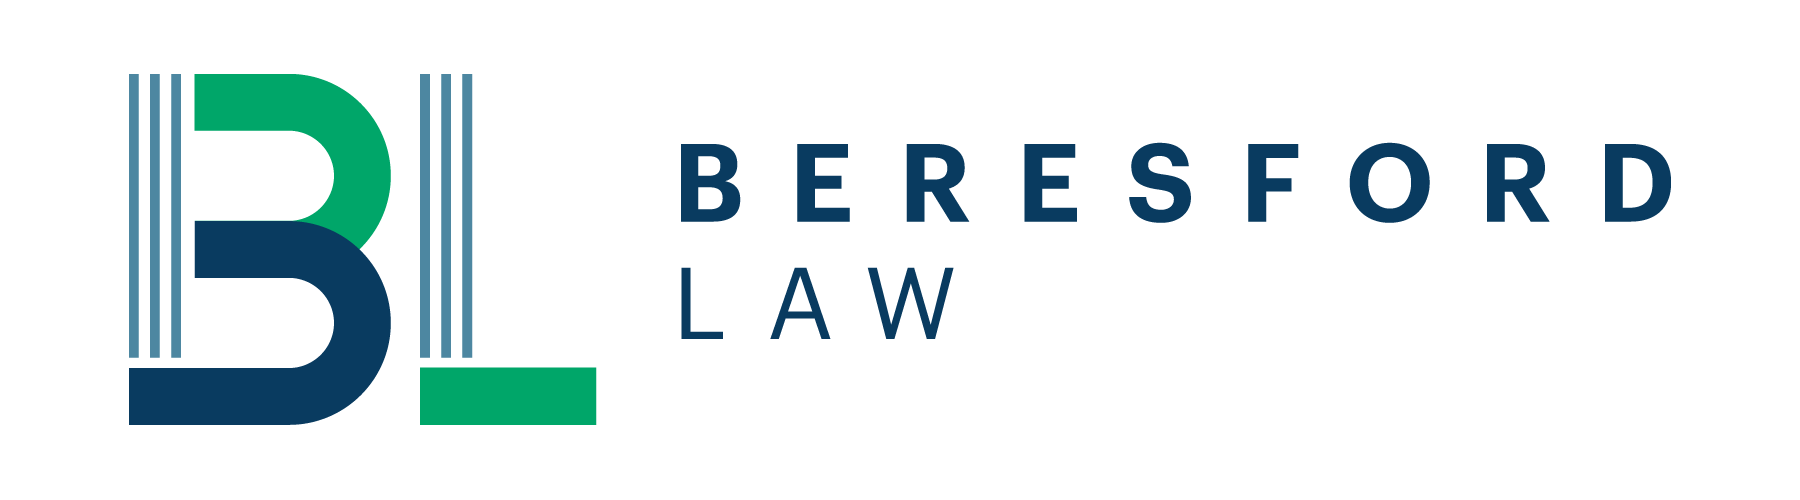 Beresford Law Logo